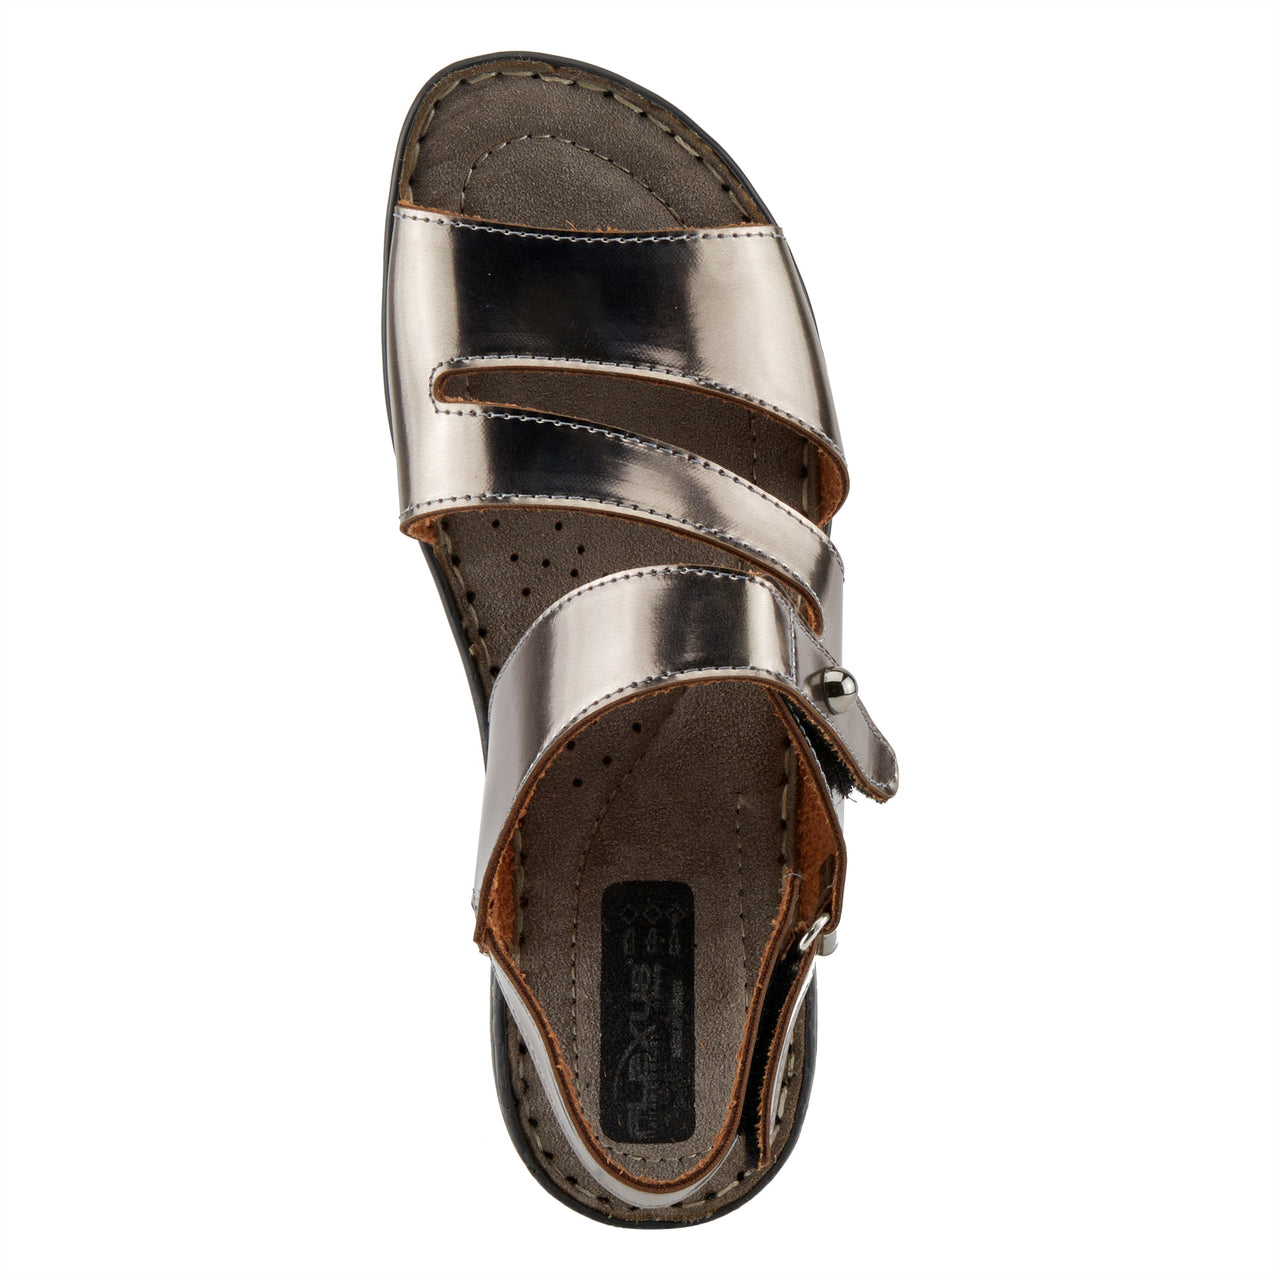 Spring Step Shoes Flexus Maera L070 Sandal